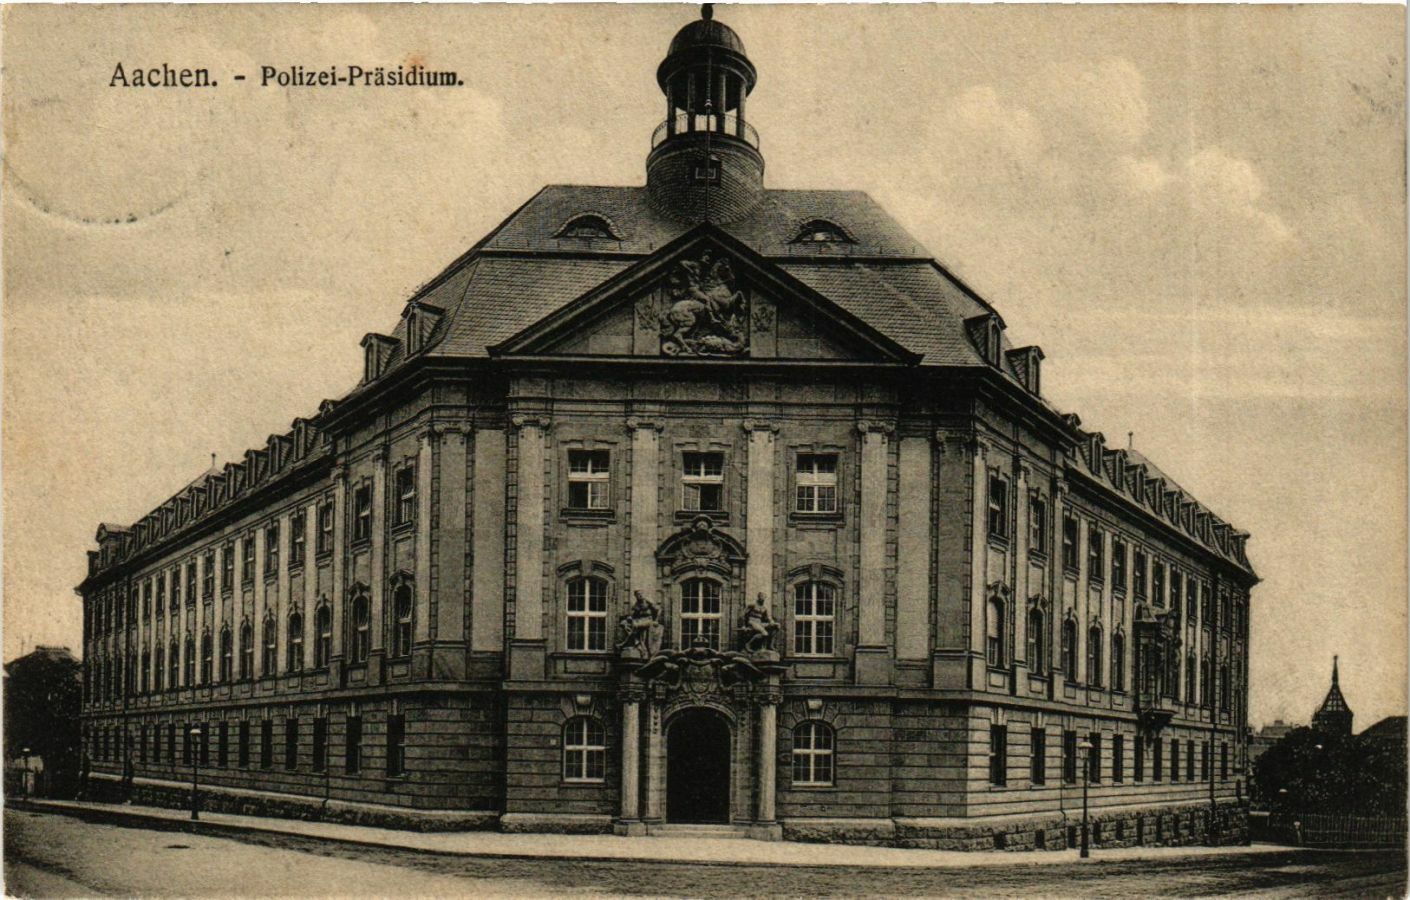 CPA AK Aachen - Police Prasidium GERMANY (942548)